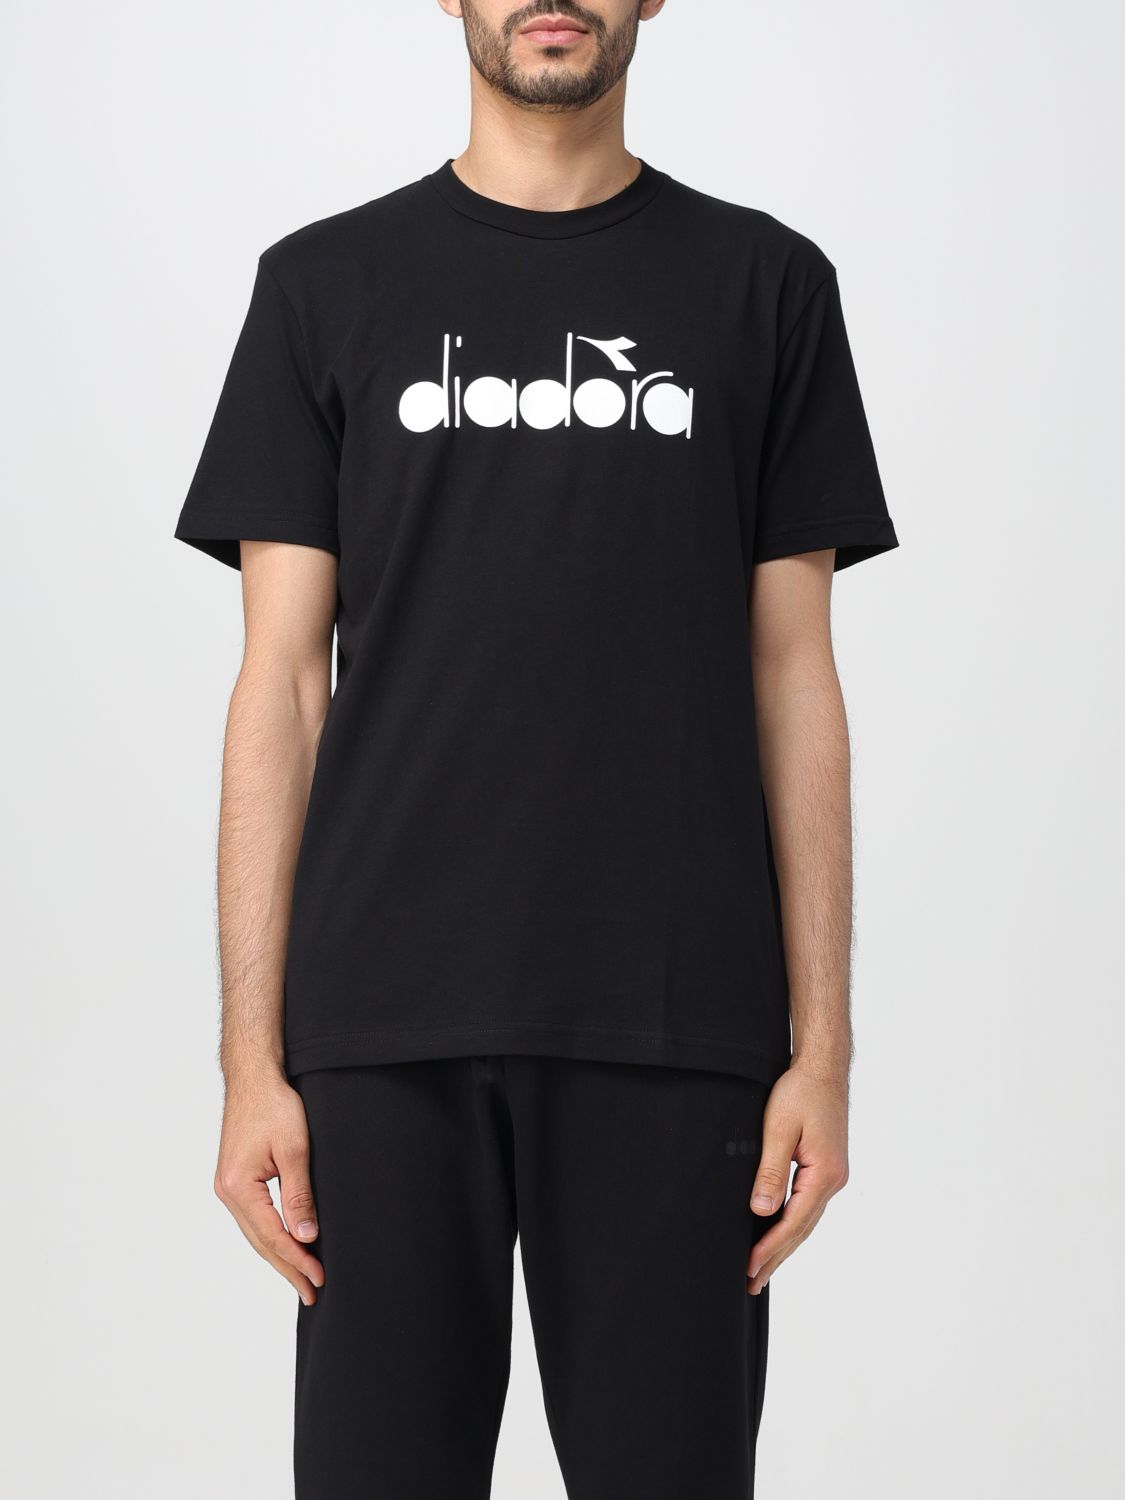 Diadora T-shirt  Men Colour Black